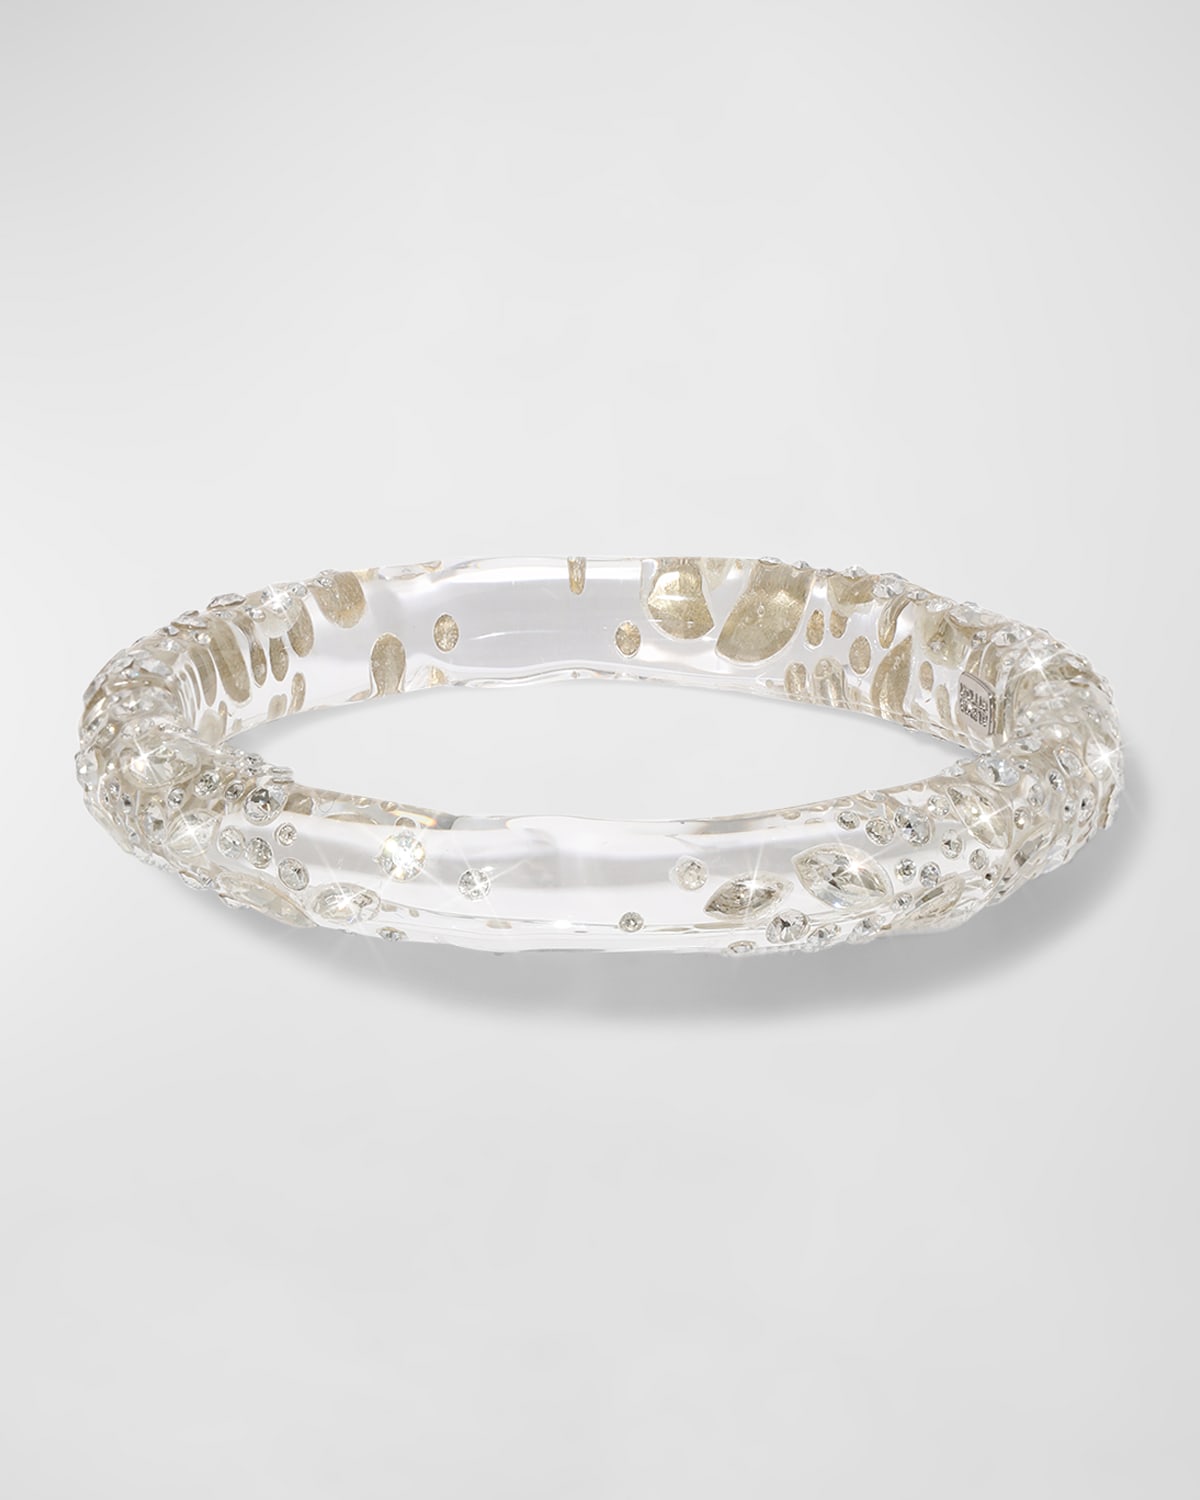 Confetti Crystal Lucite Skinny Hinge Bracelet